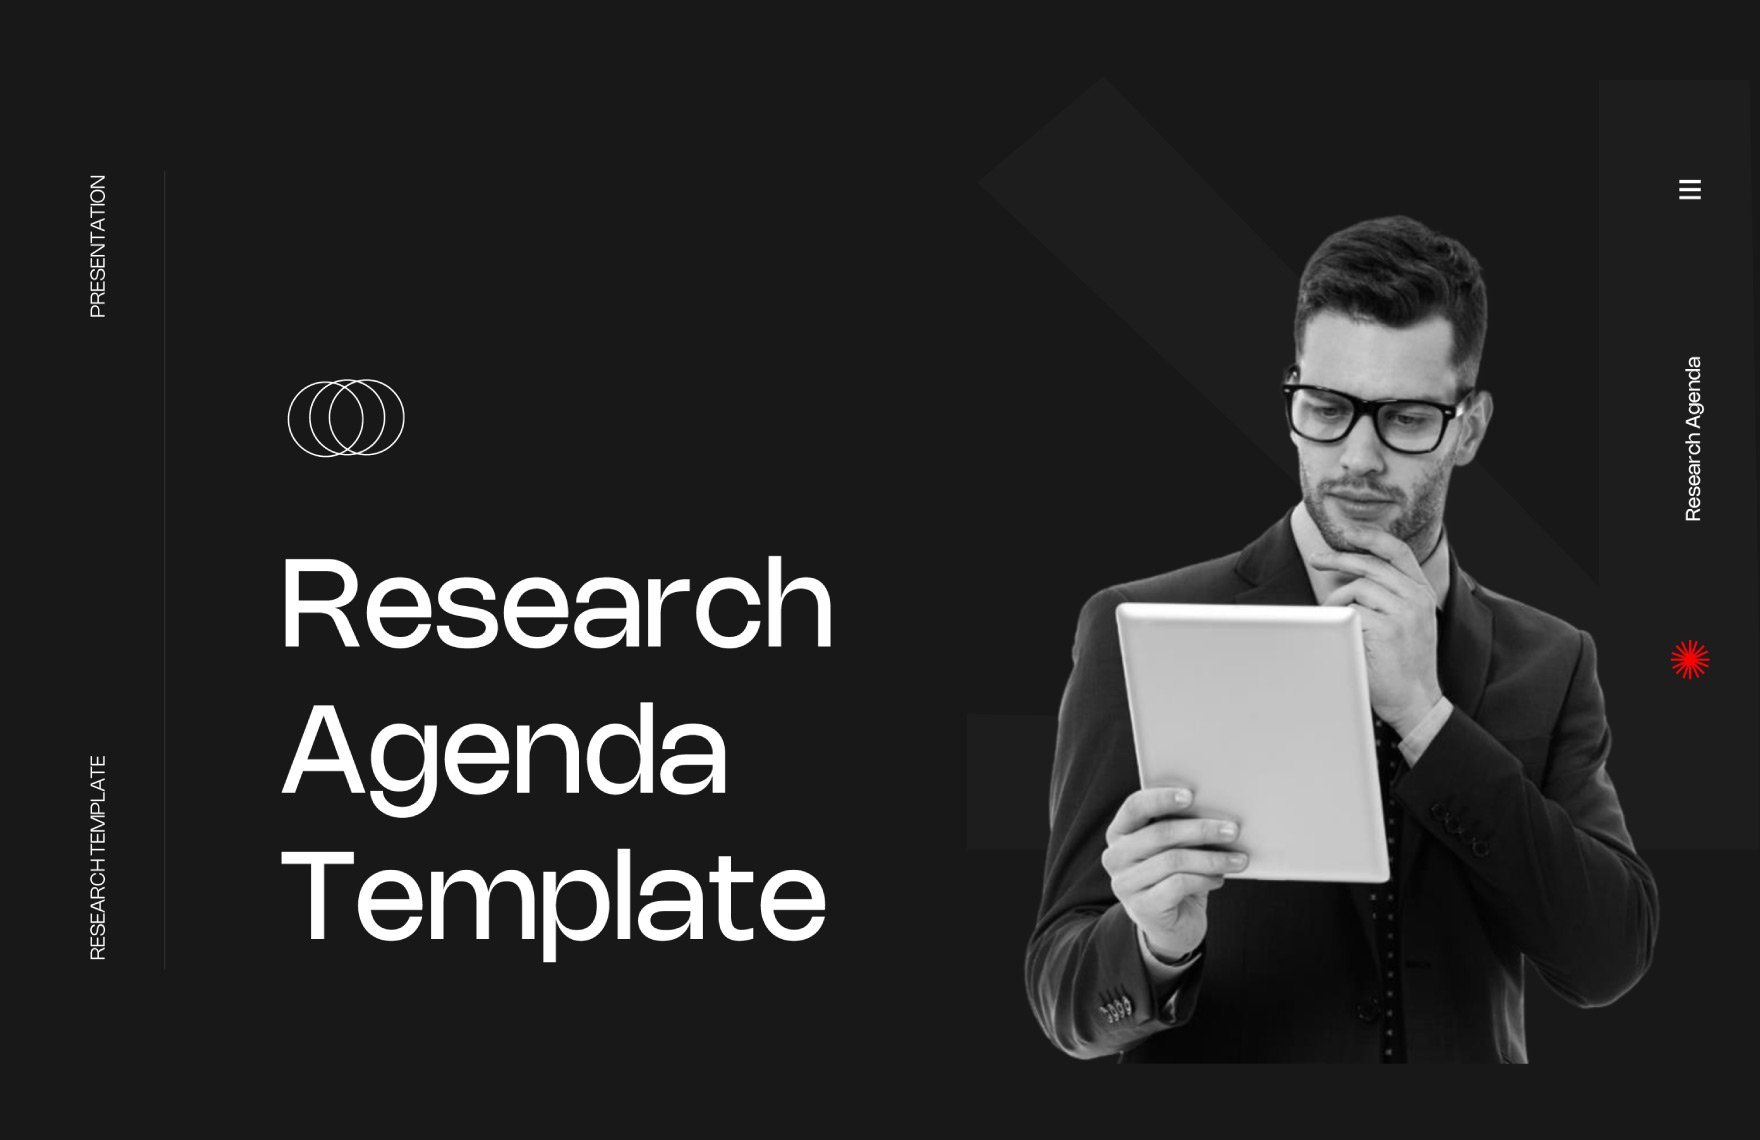 Research Agenda Template